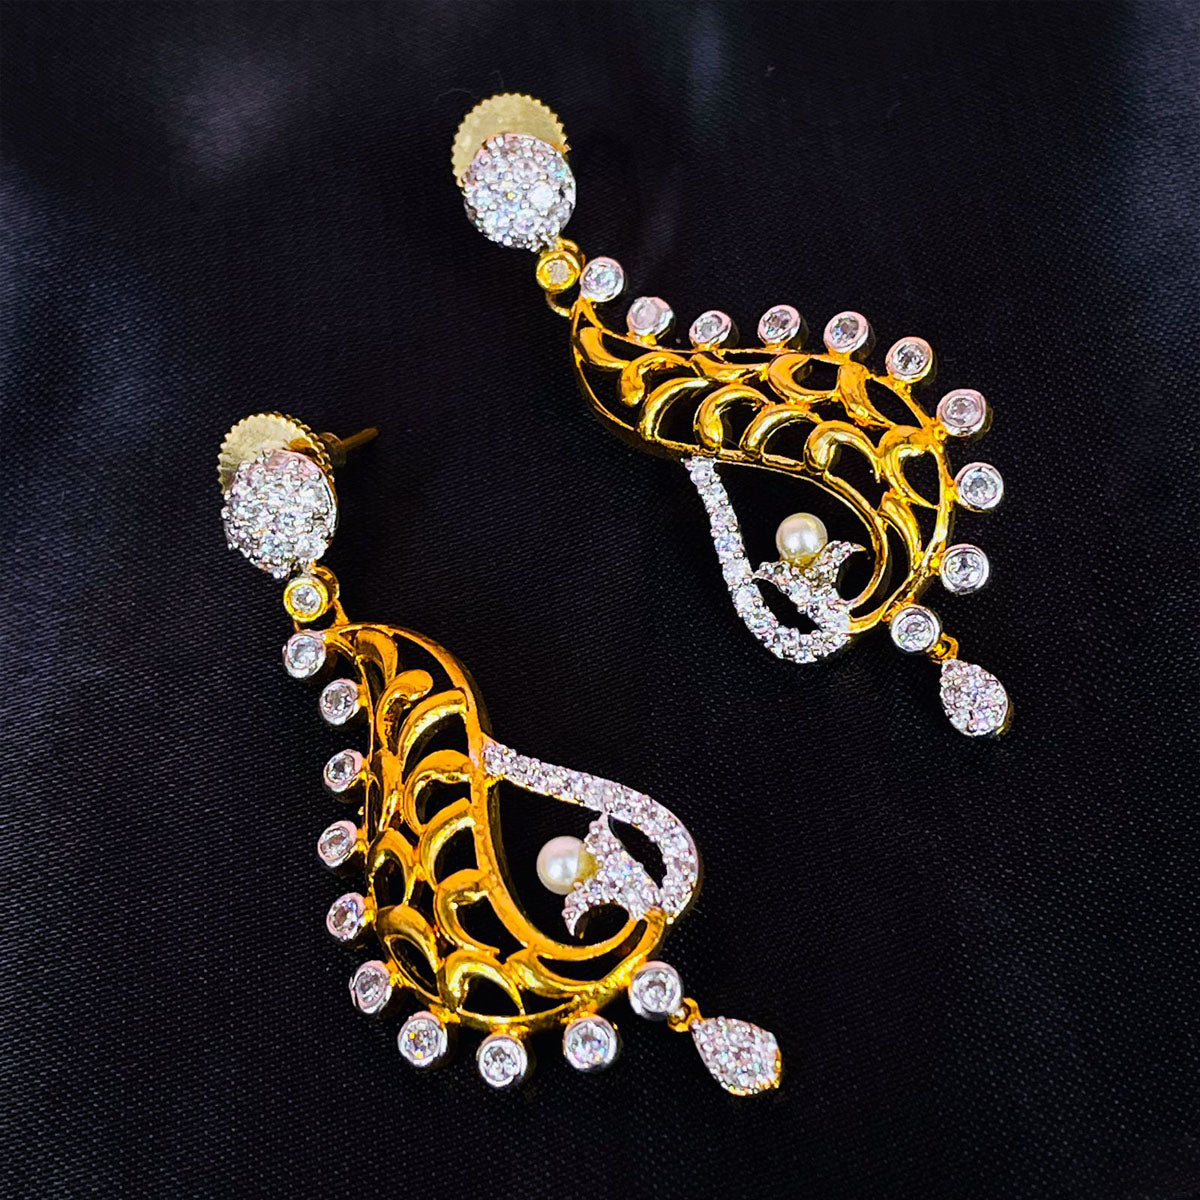 American Diamond Gold Gold-Plated Dangle & Drop Earring For Women